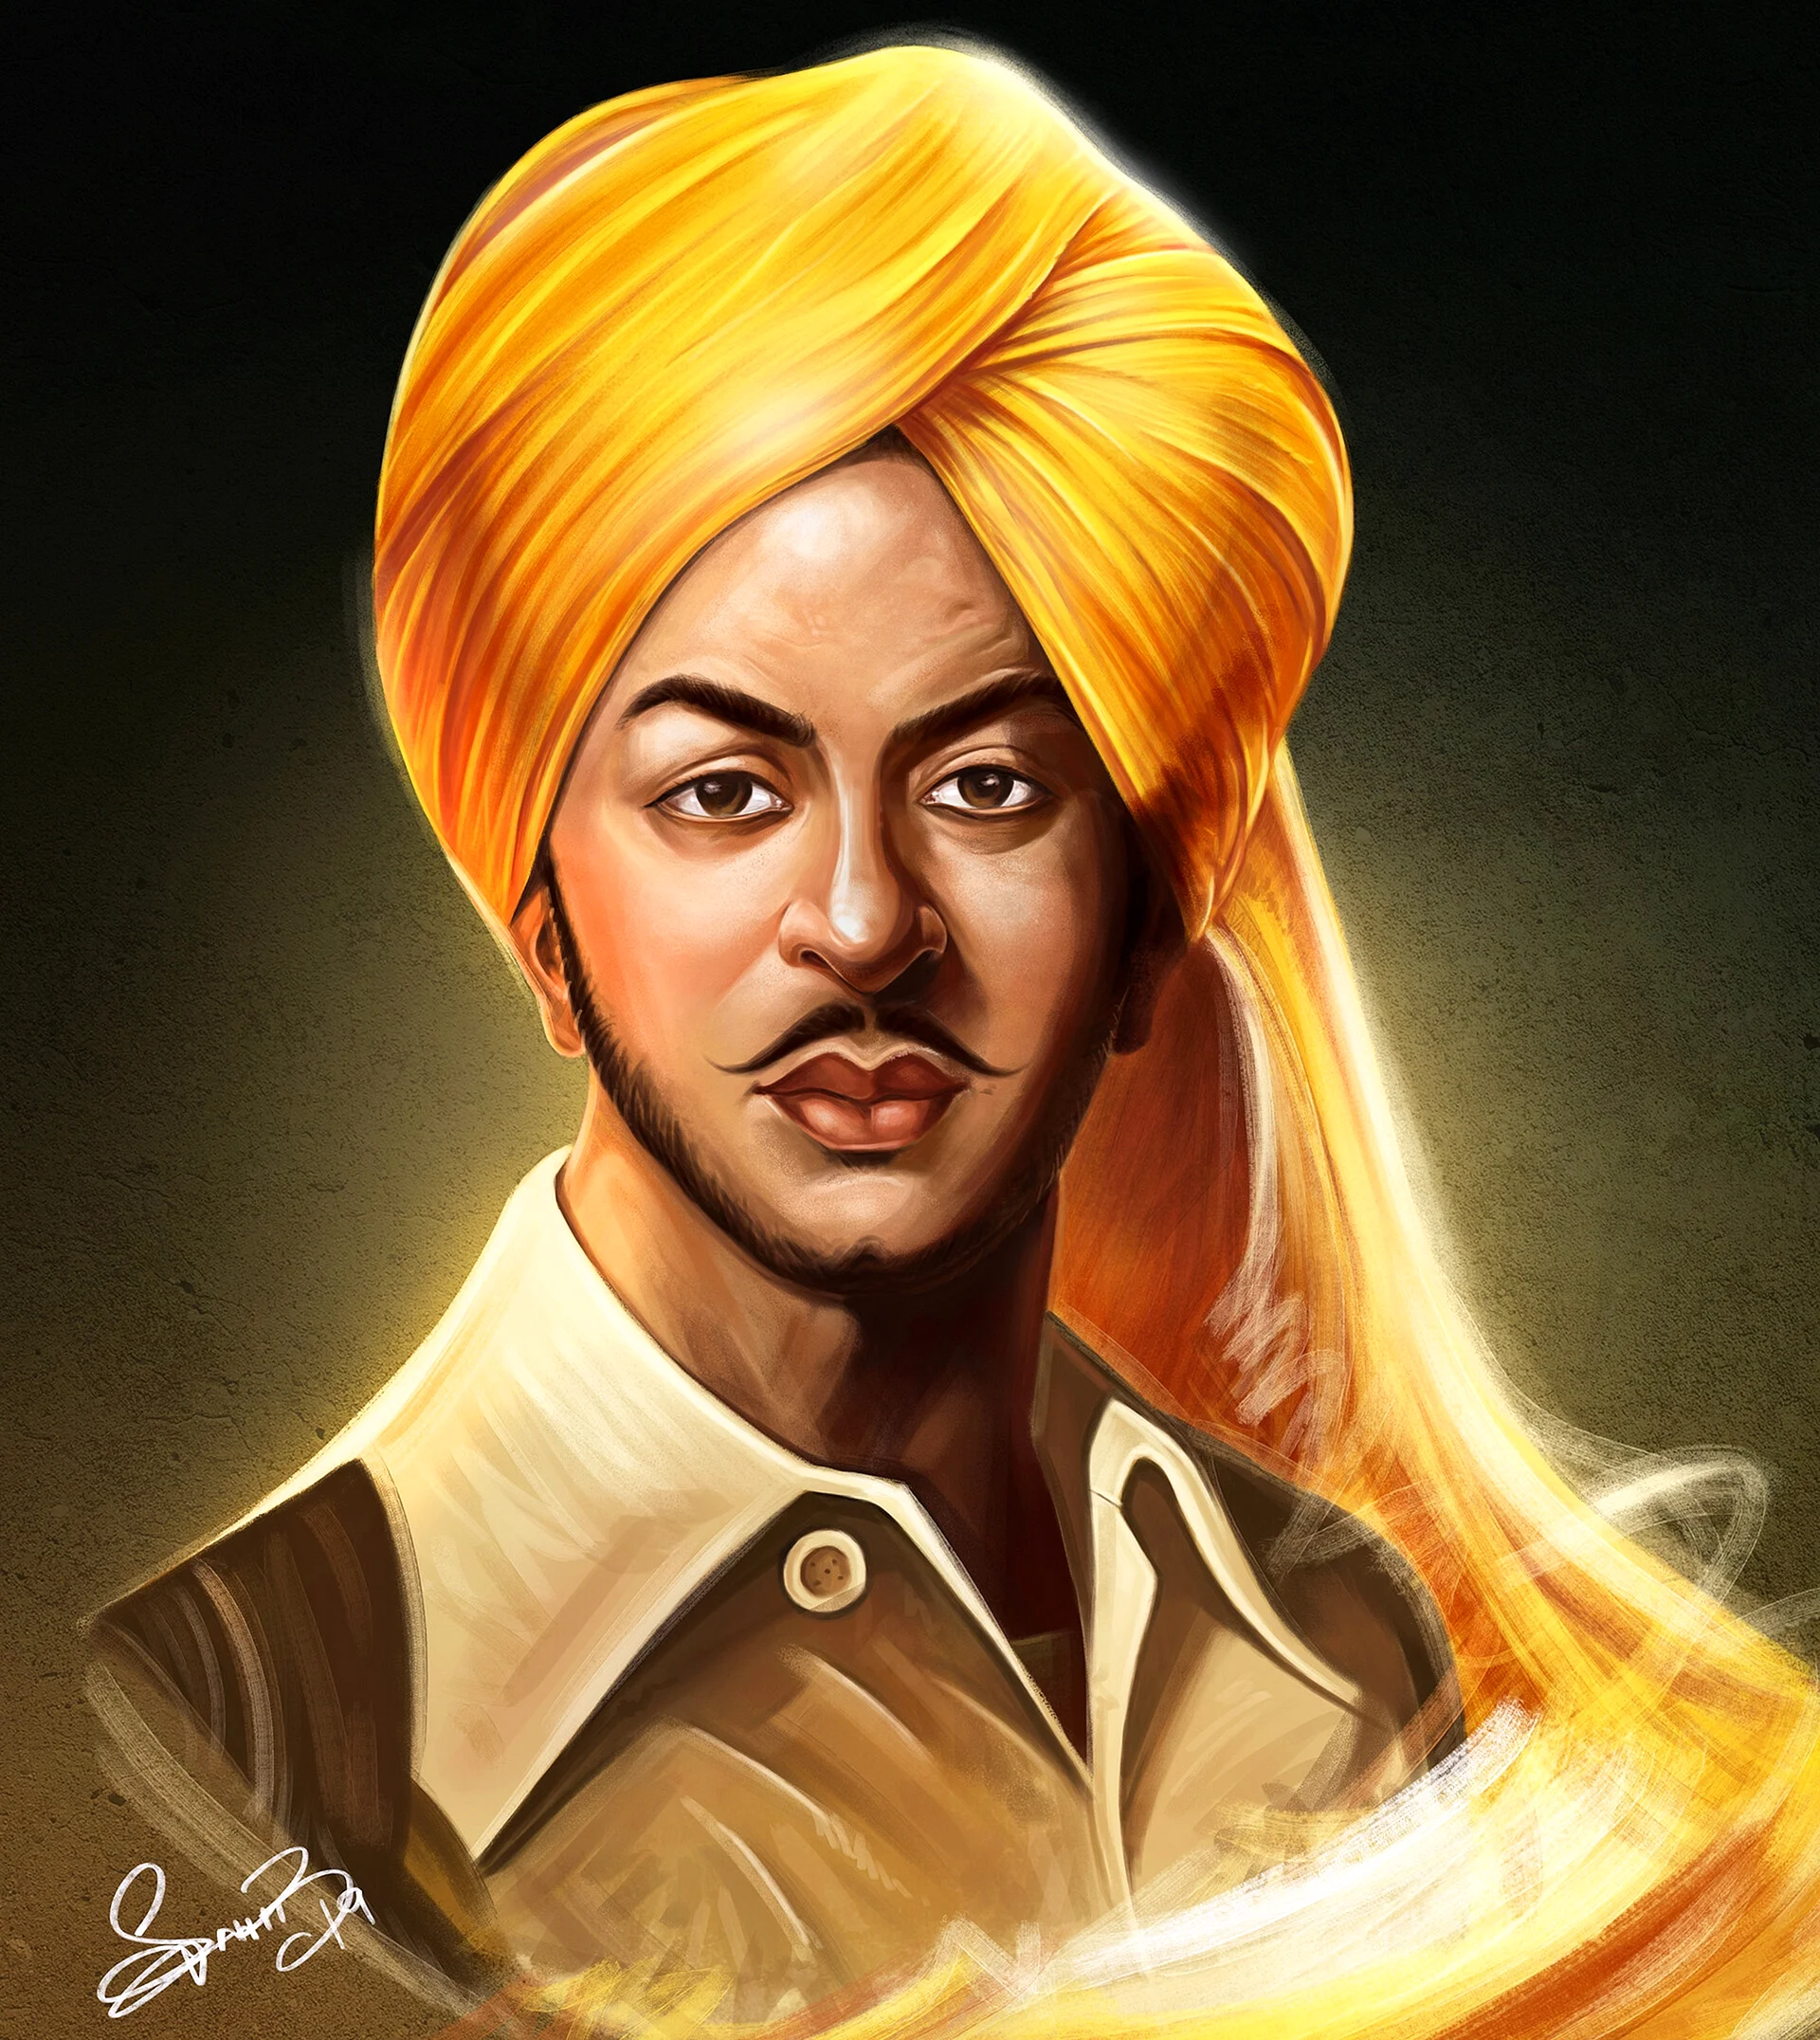 Shaheed Bhagat Singh Wallpaper